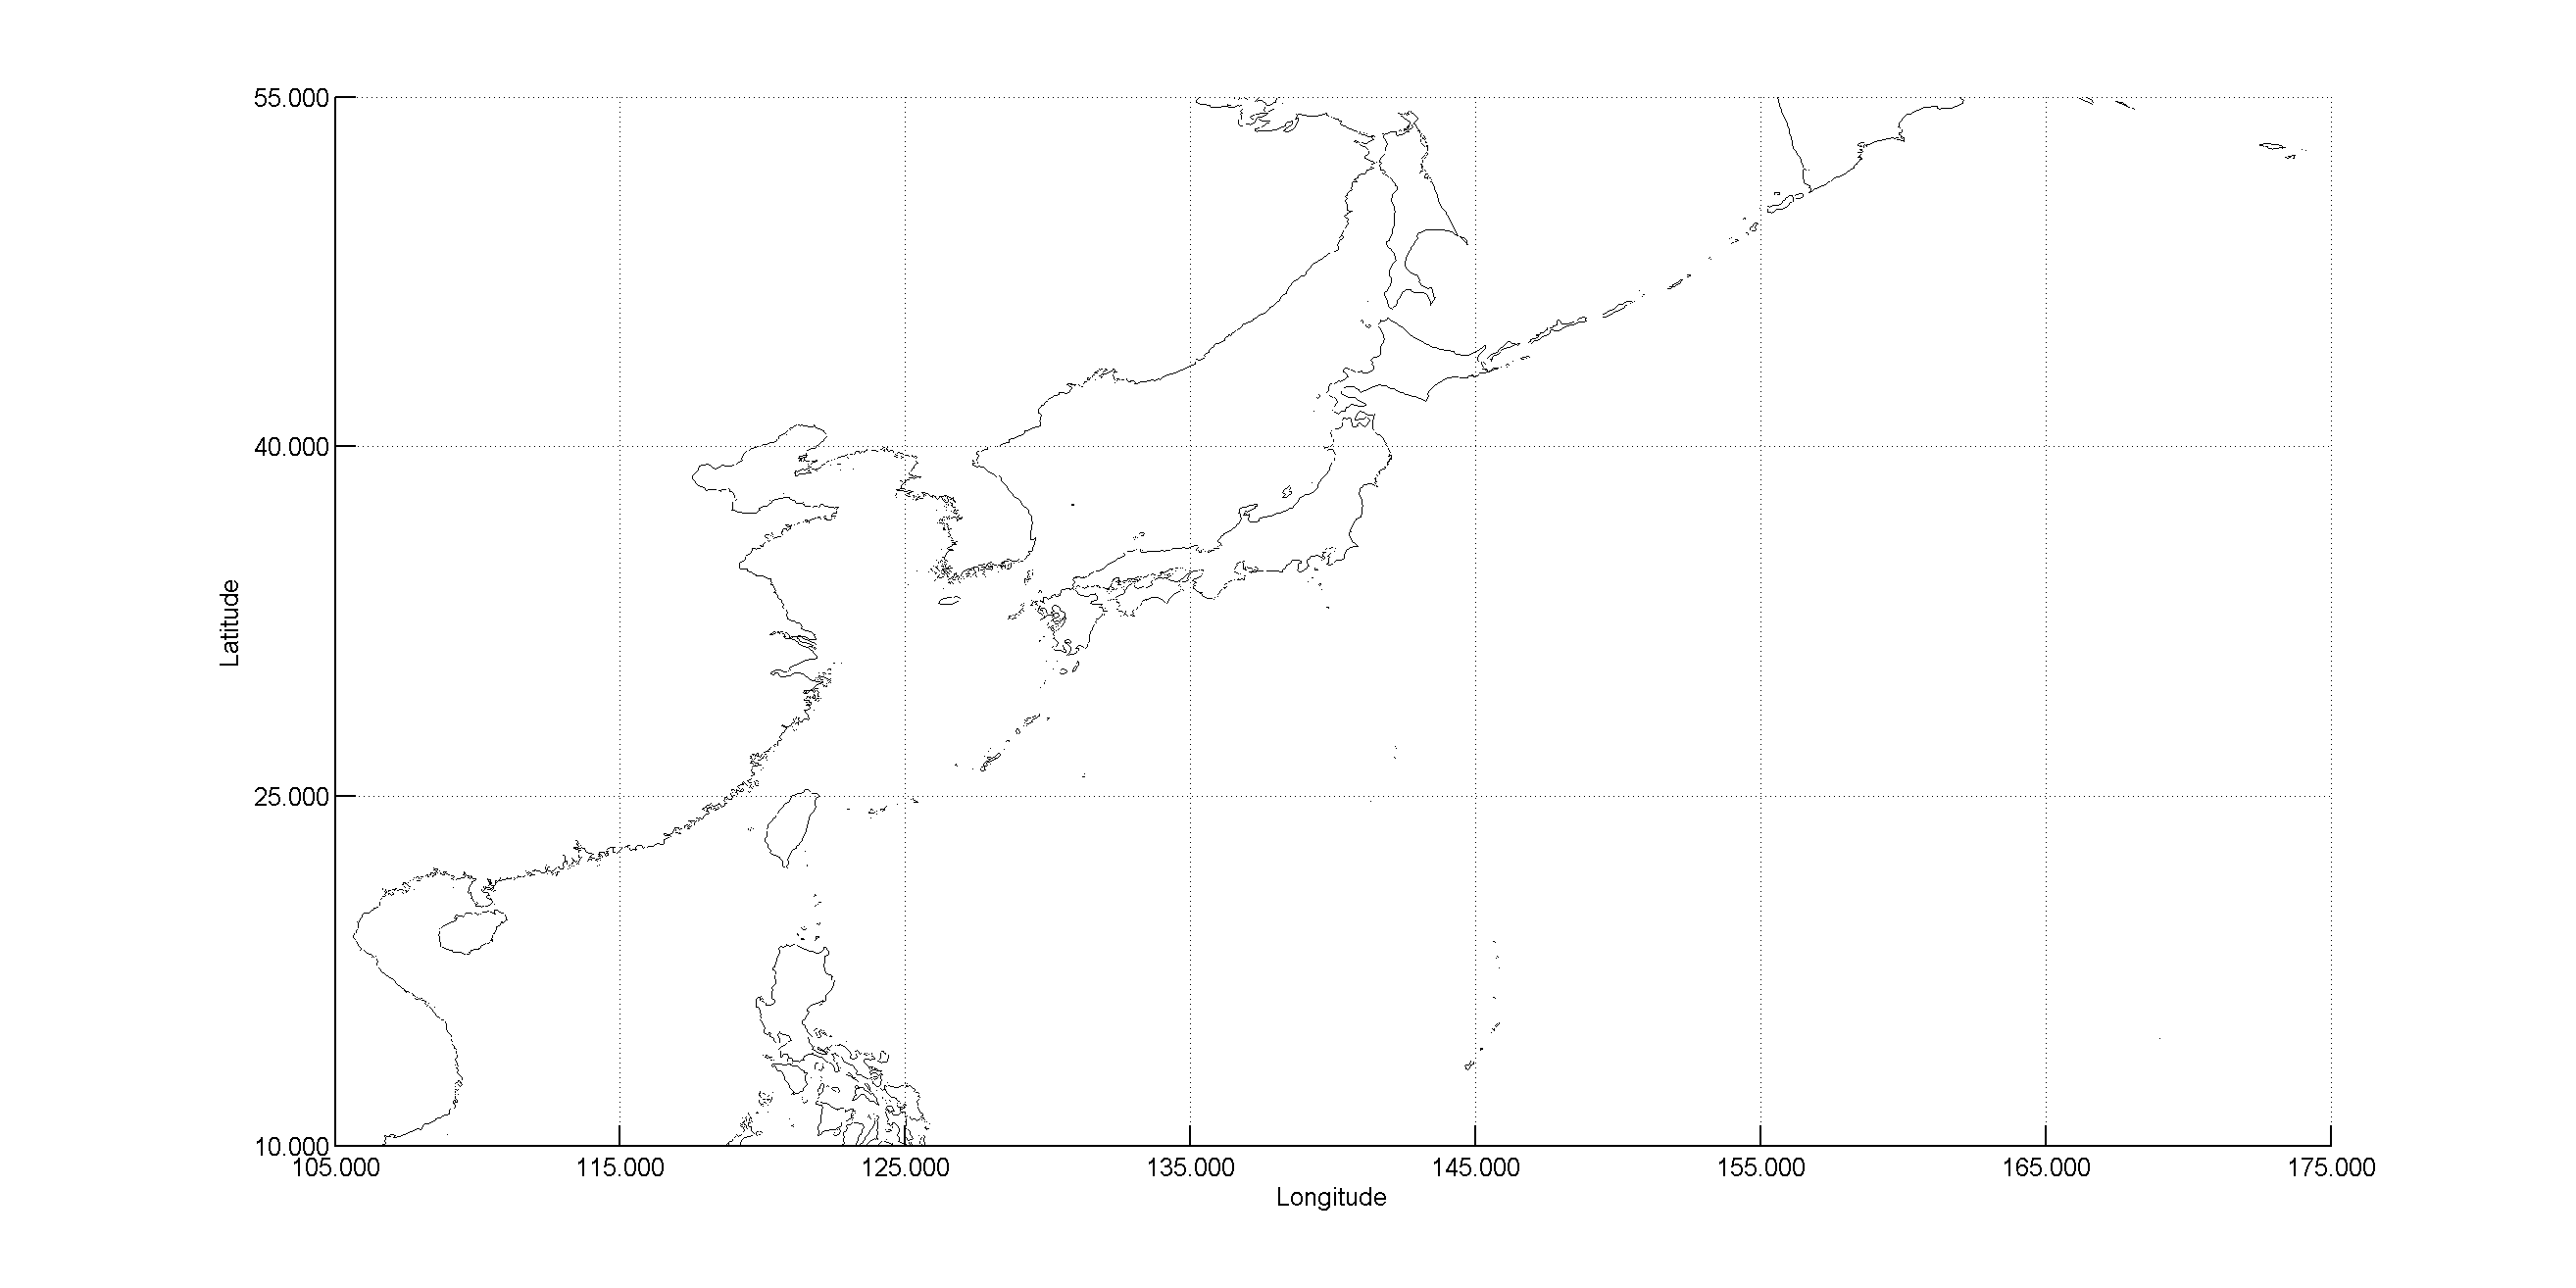 CYCLE_202 - Japan Descending passes